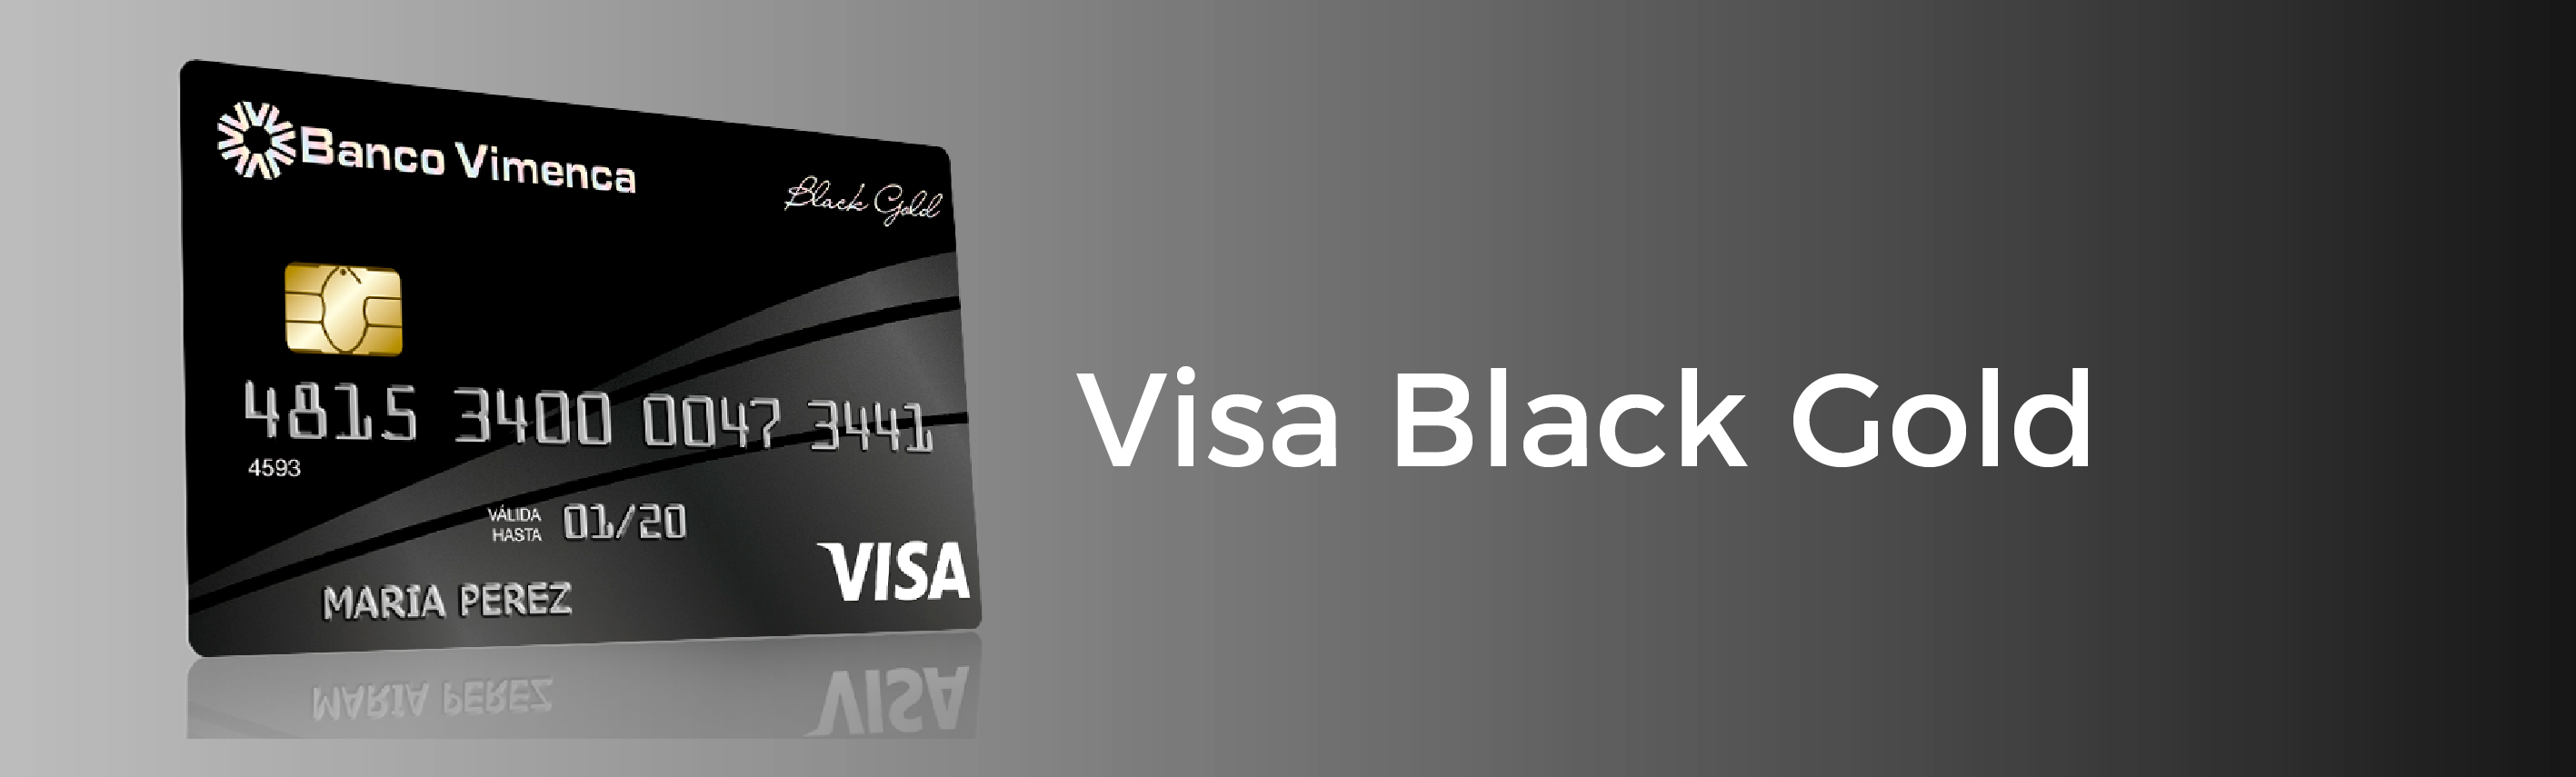 Tarjeta de Crédito Visa Black Gold Internacional